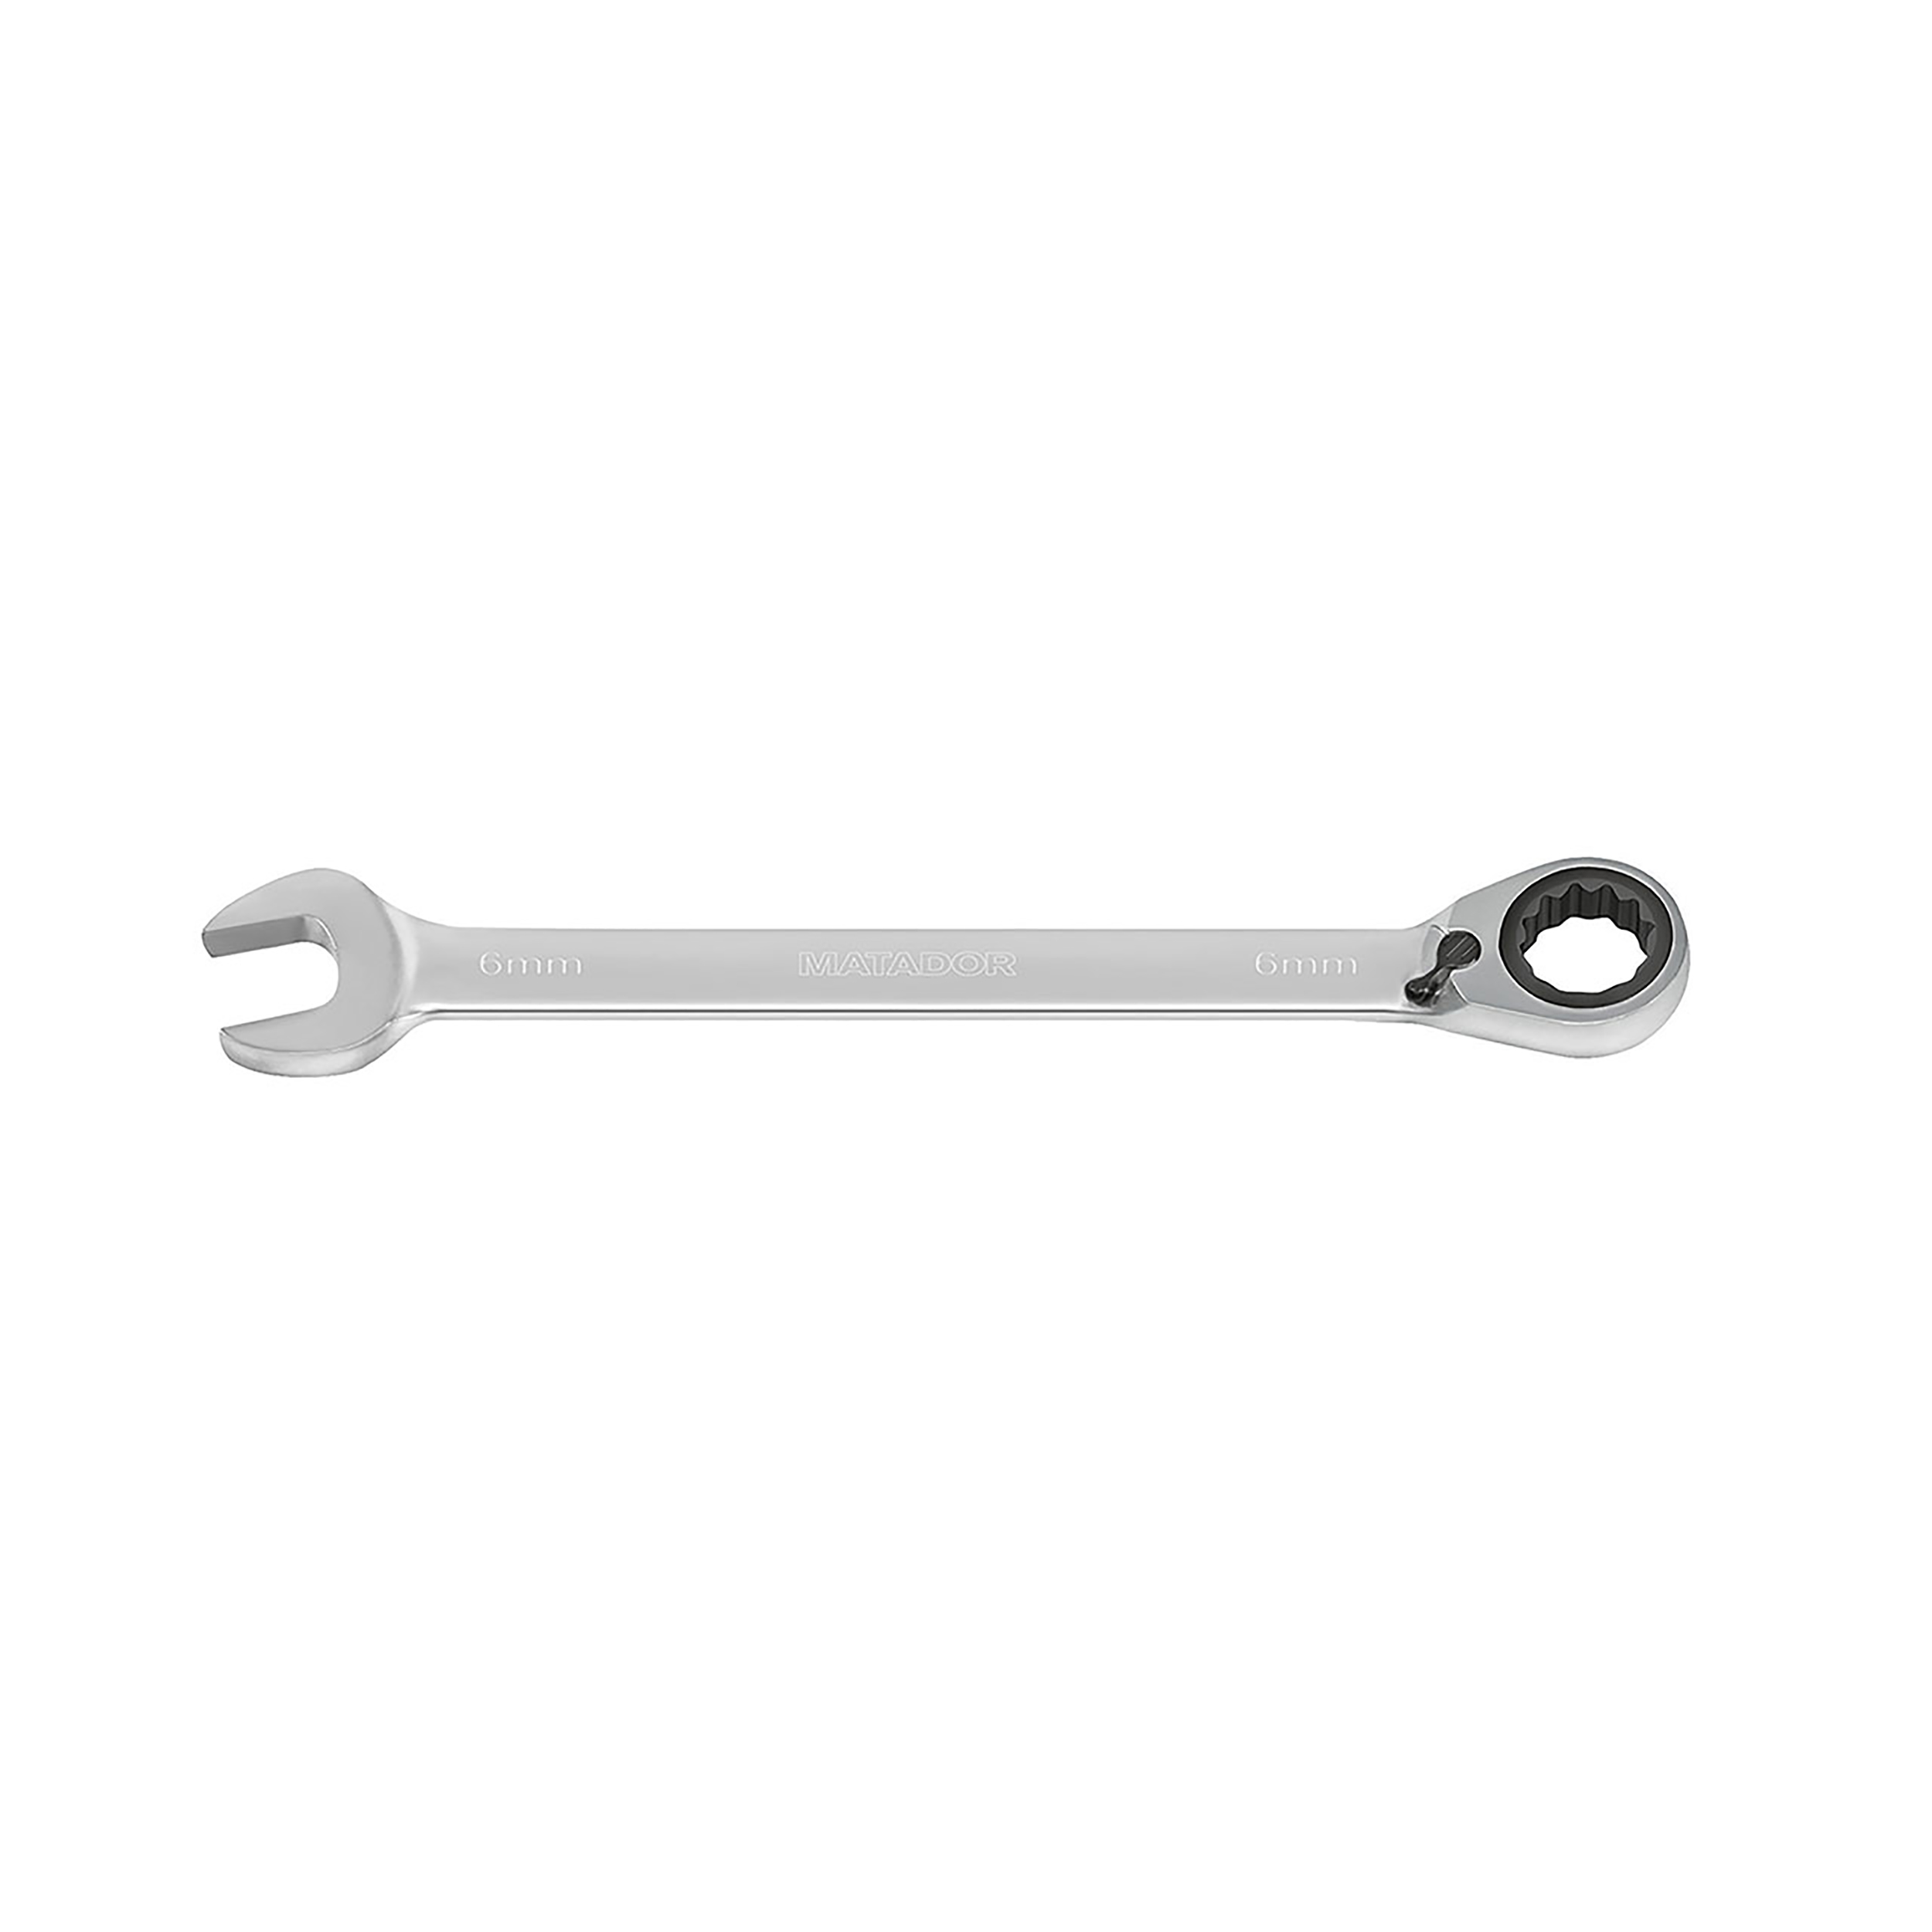 Knarren-Ringmaulschlüssel mit Hebel, 13 mm, 138 Nm, MATADOR Art.-Nr.: 01890130